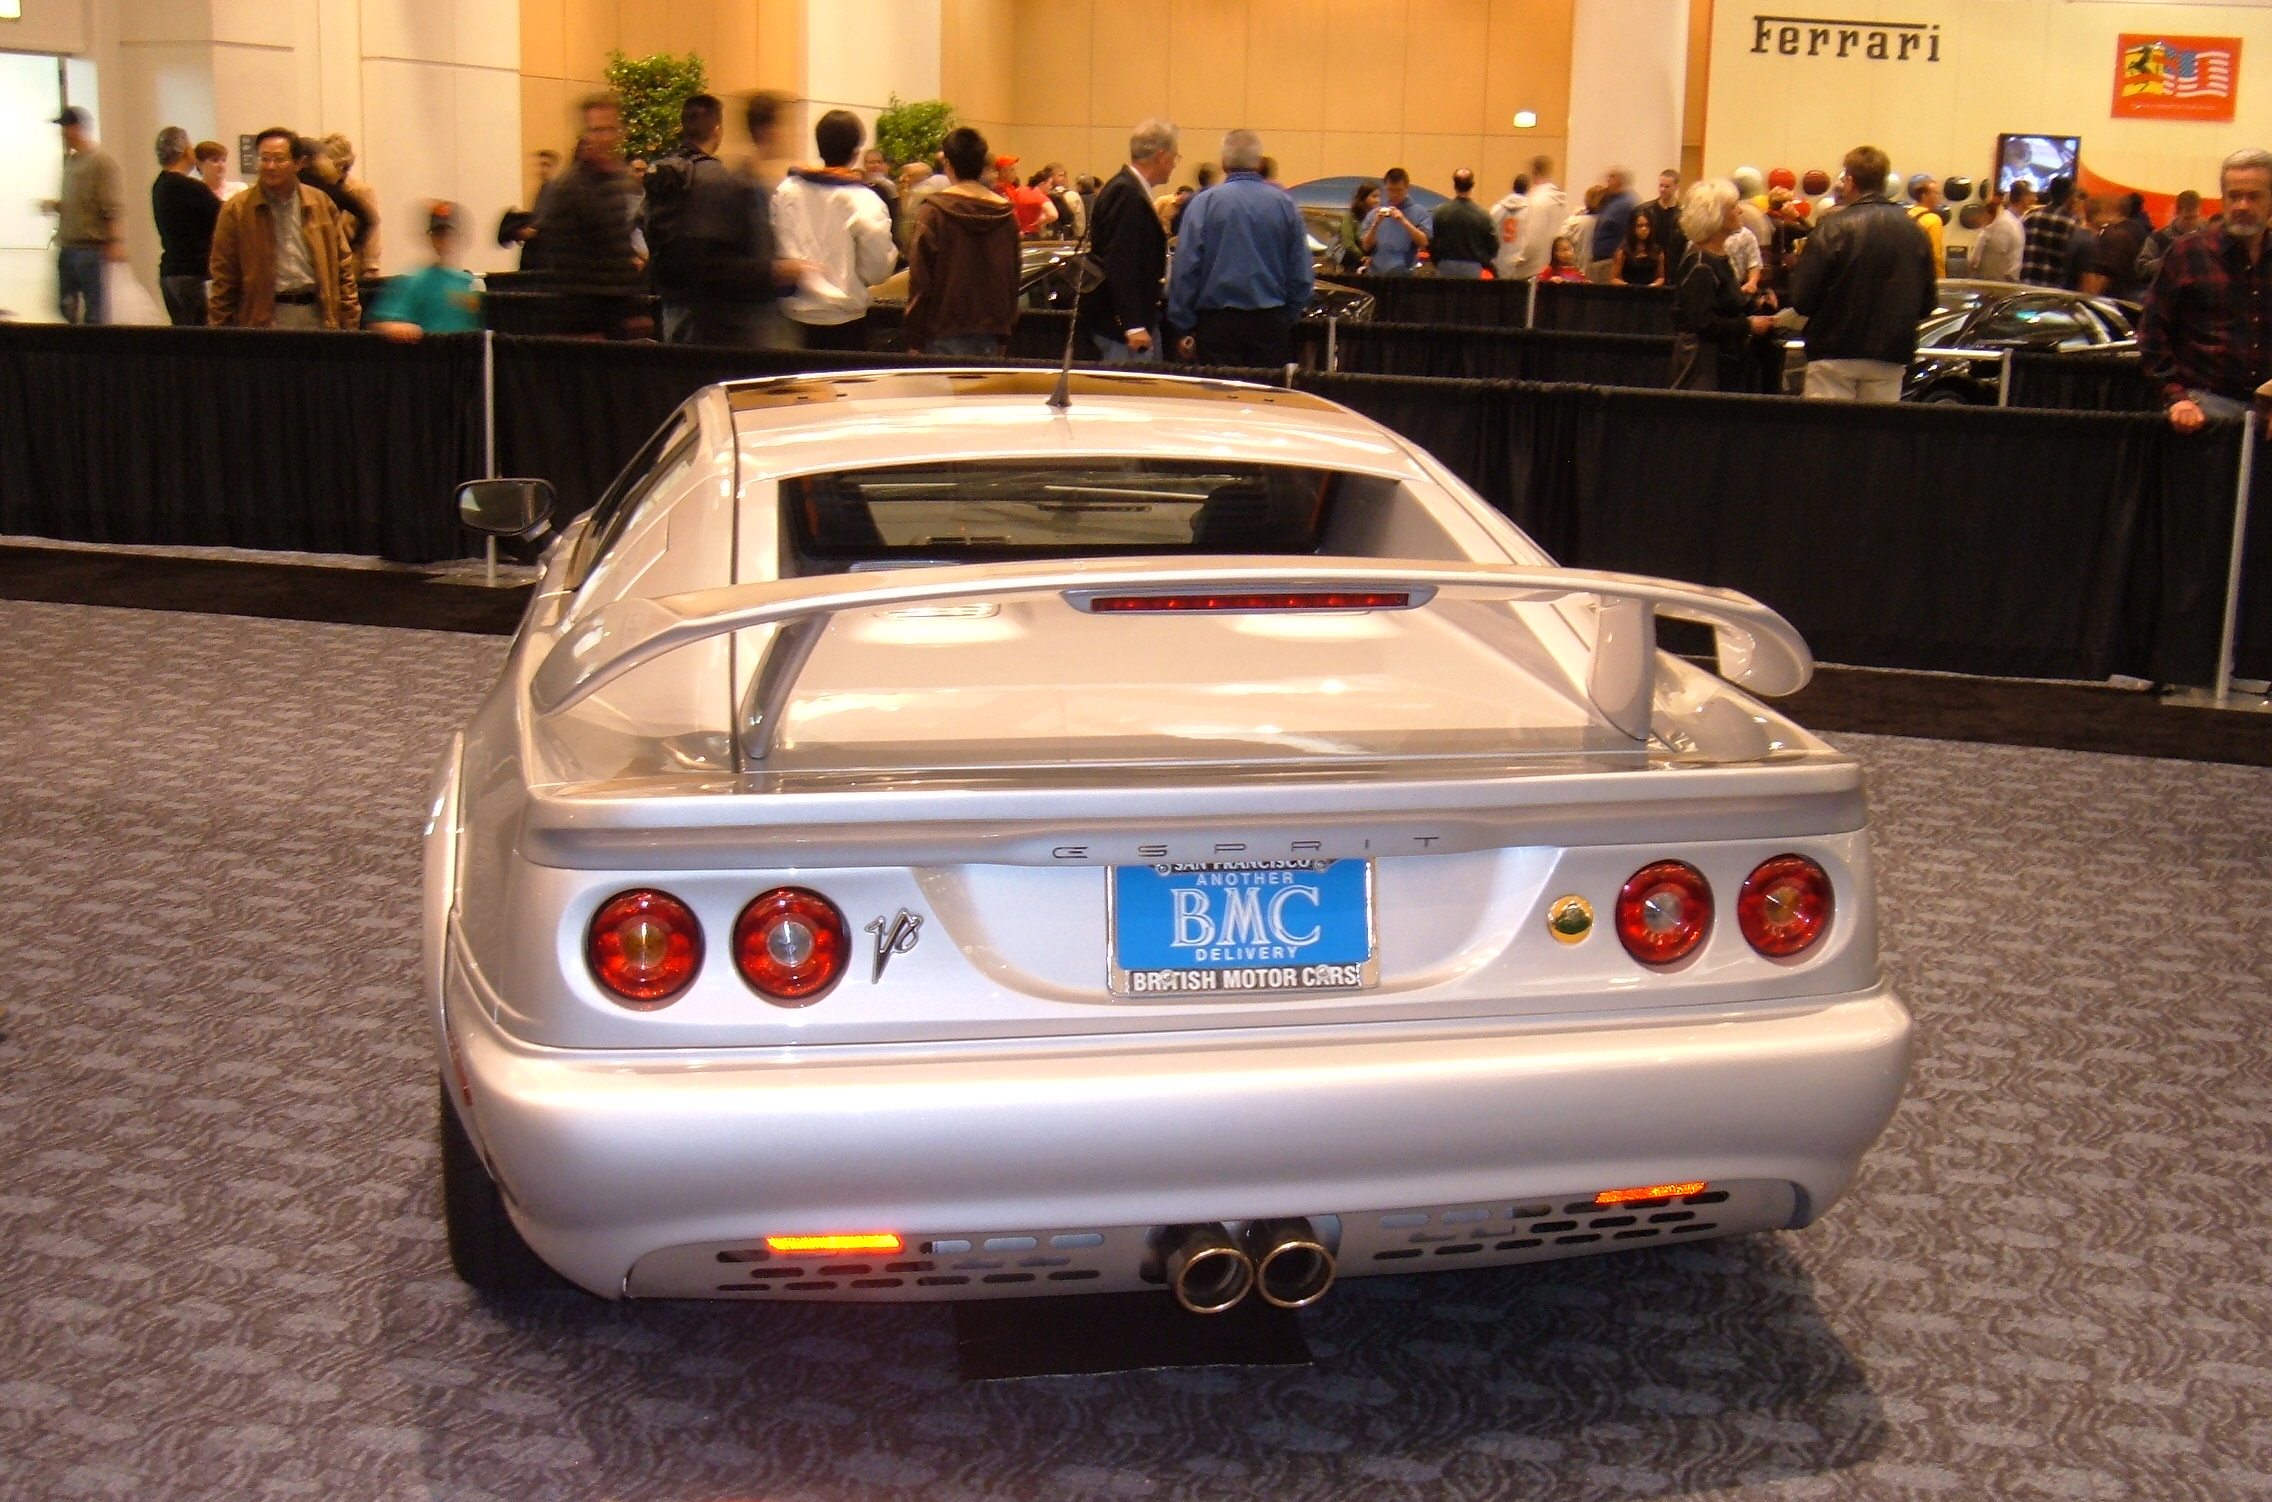 File:Silver Lotus Esprit V8.JPG - Wikimedia Commons